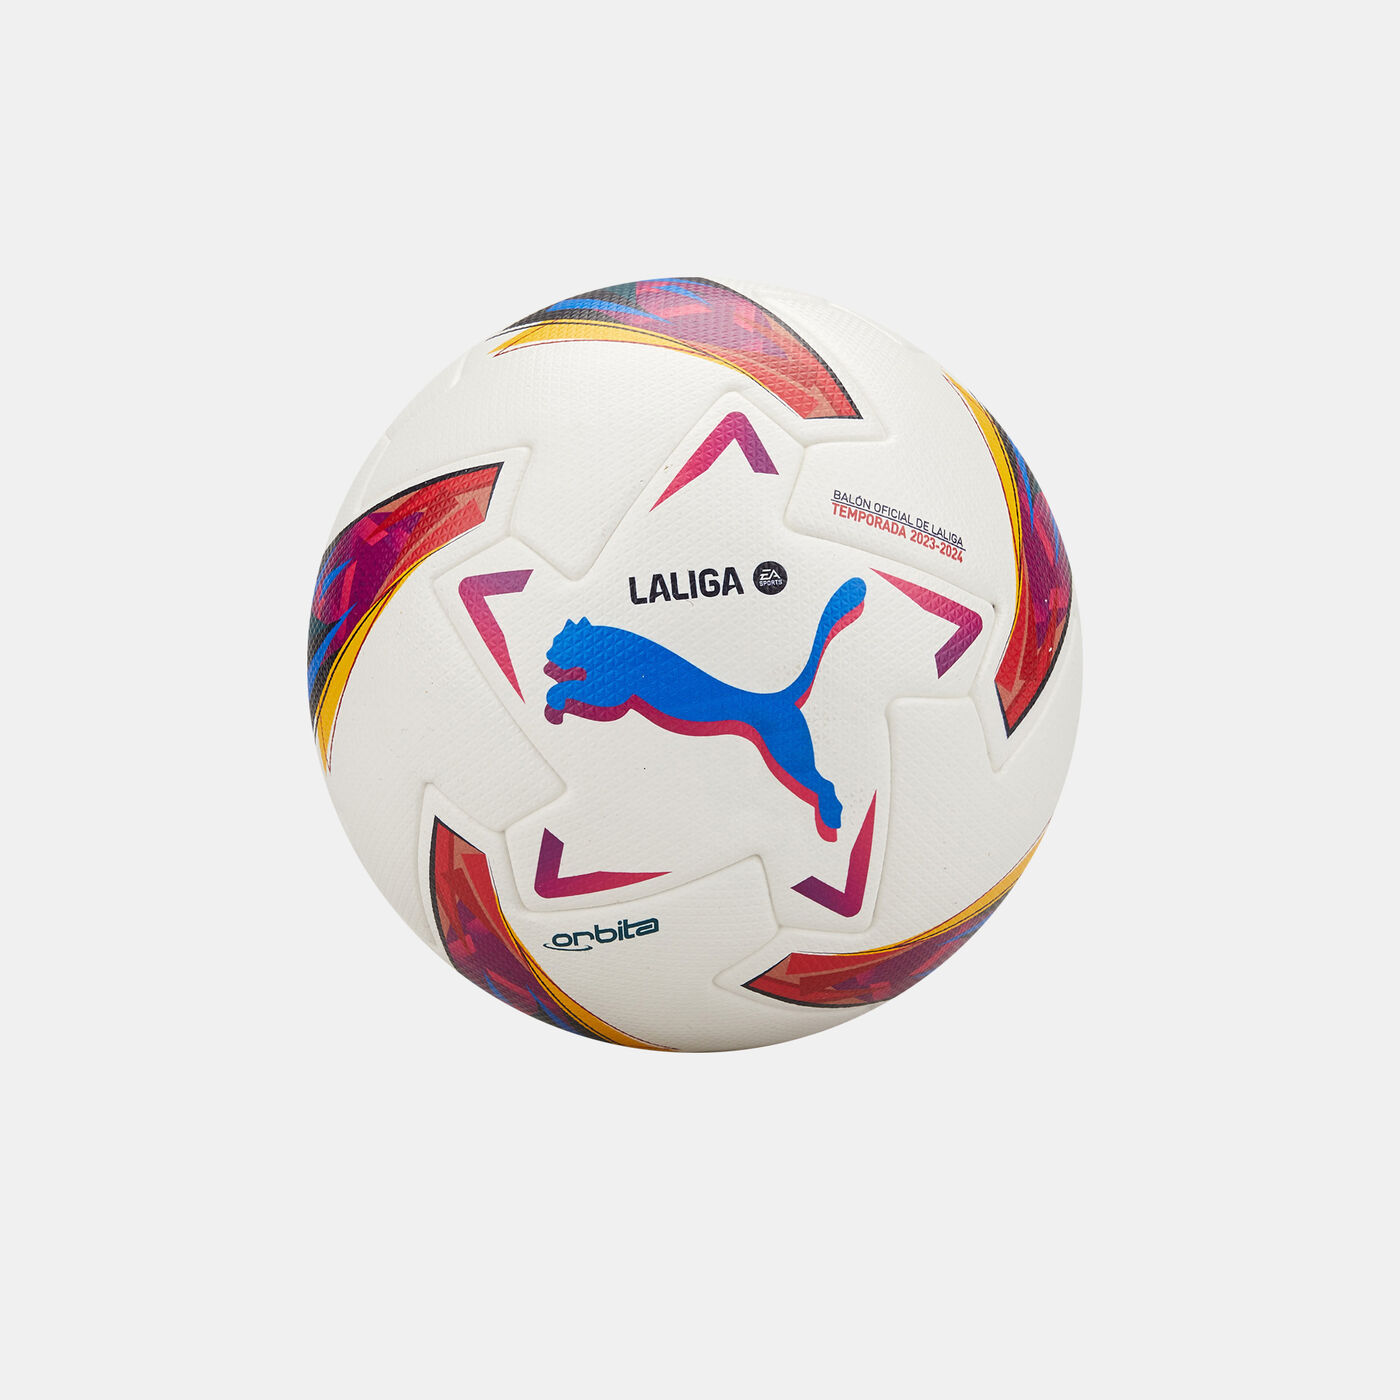 Orbita LaLiga 1 FIFA Quality Pro Football